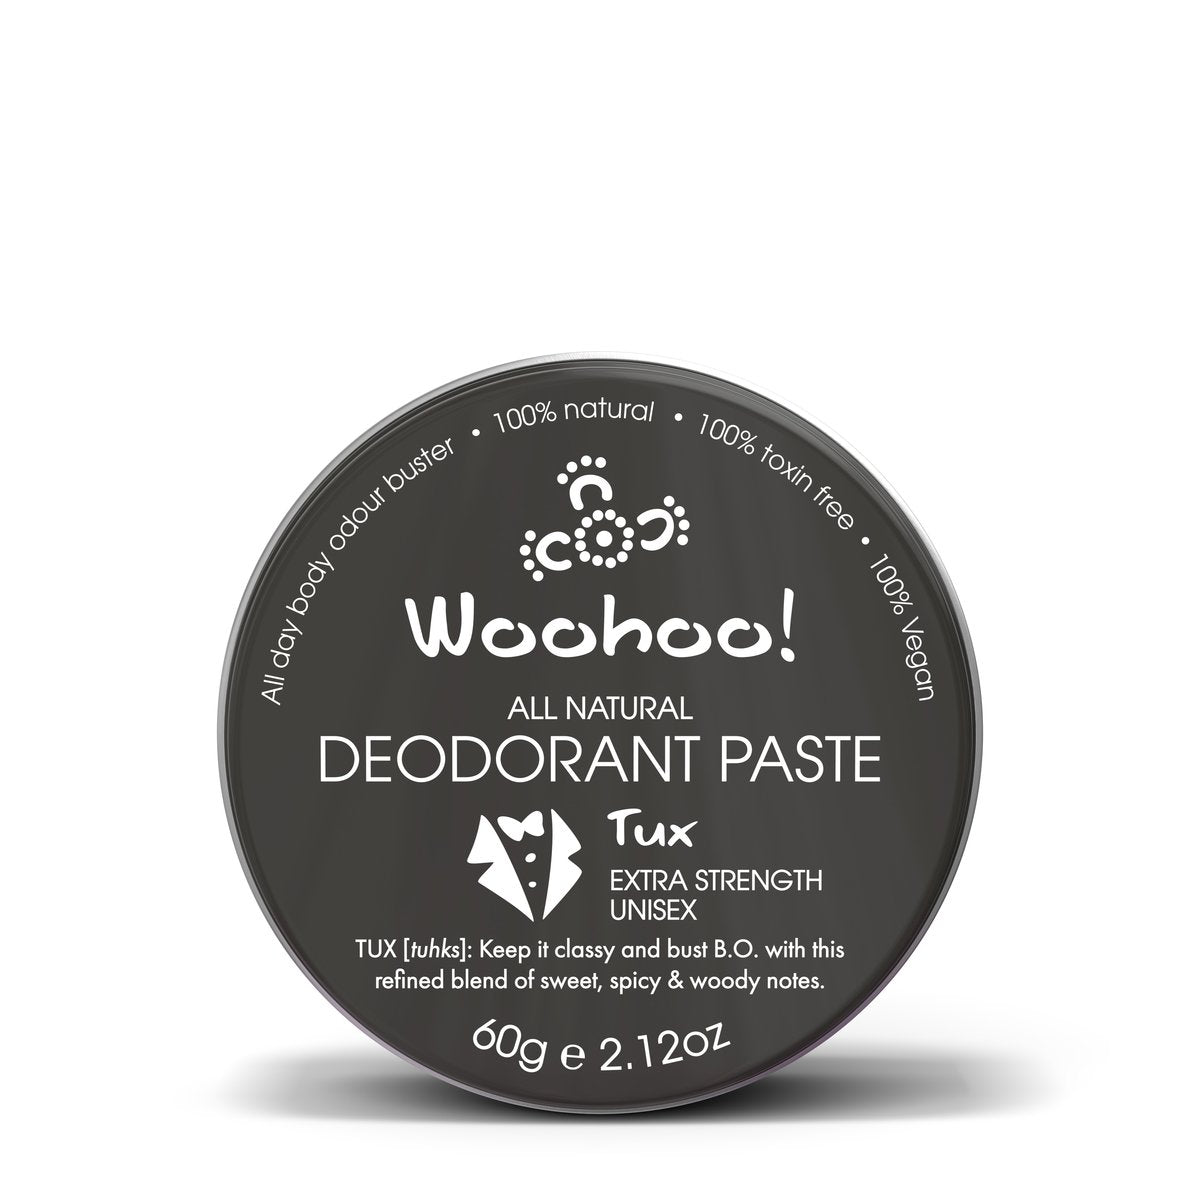 Woohoo Deodorant & Anti-Chafe Stick 60g - Tux